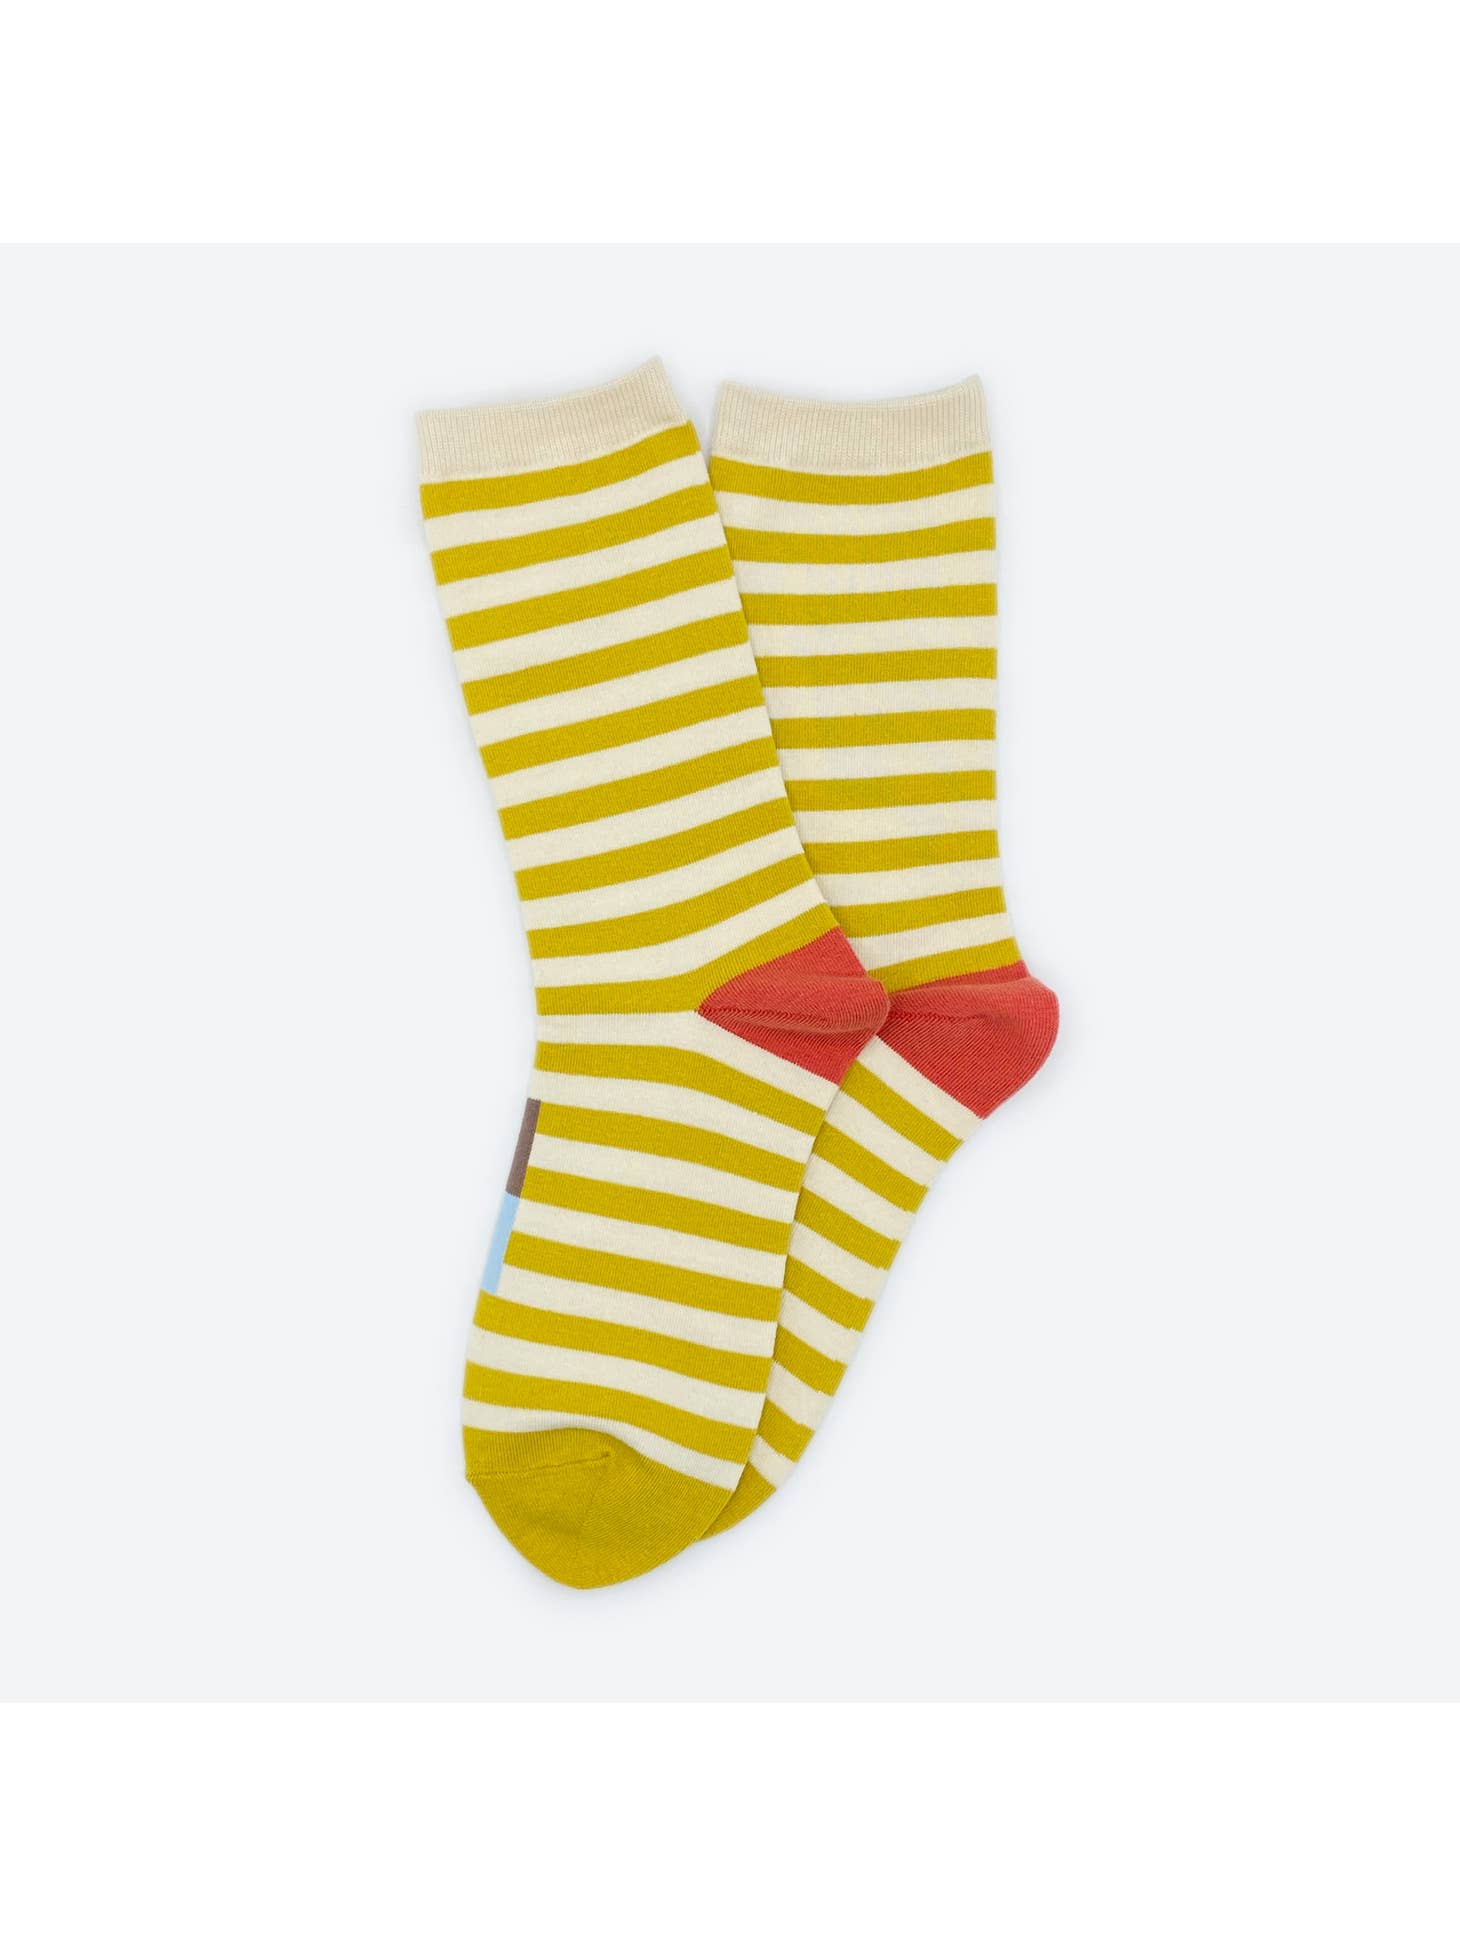 Hooray Sock Co. Eureka Socks, Men's